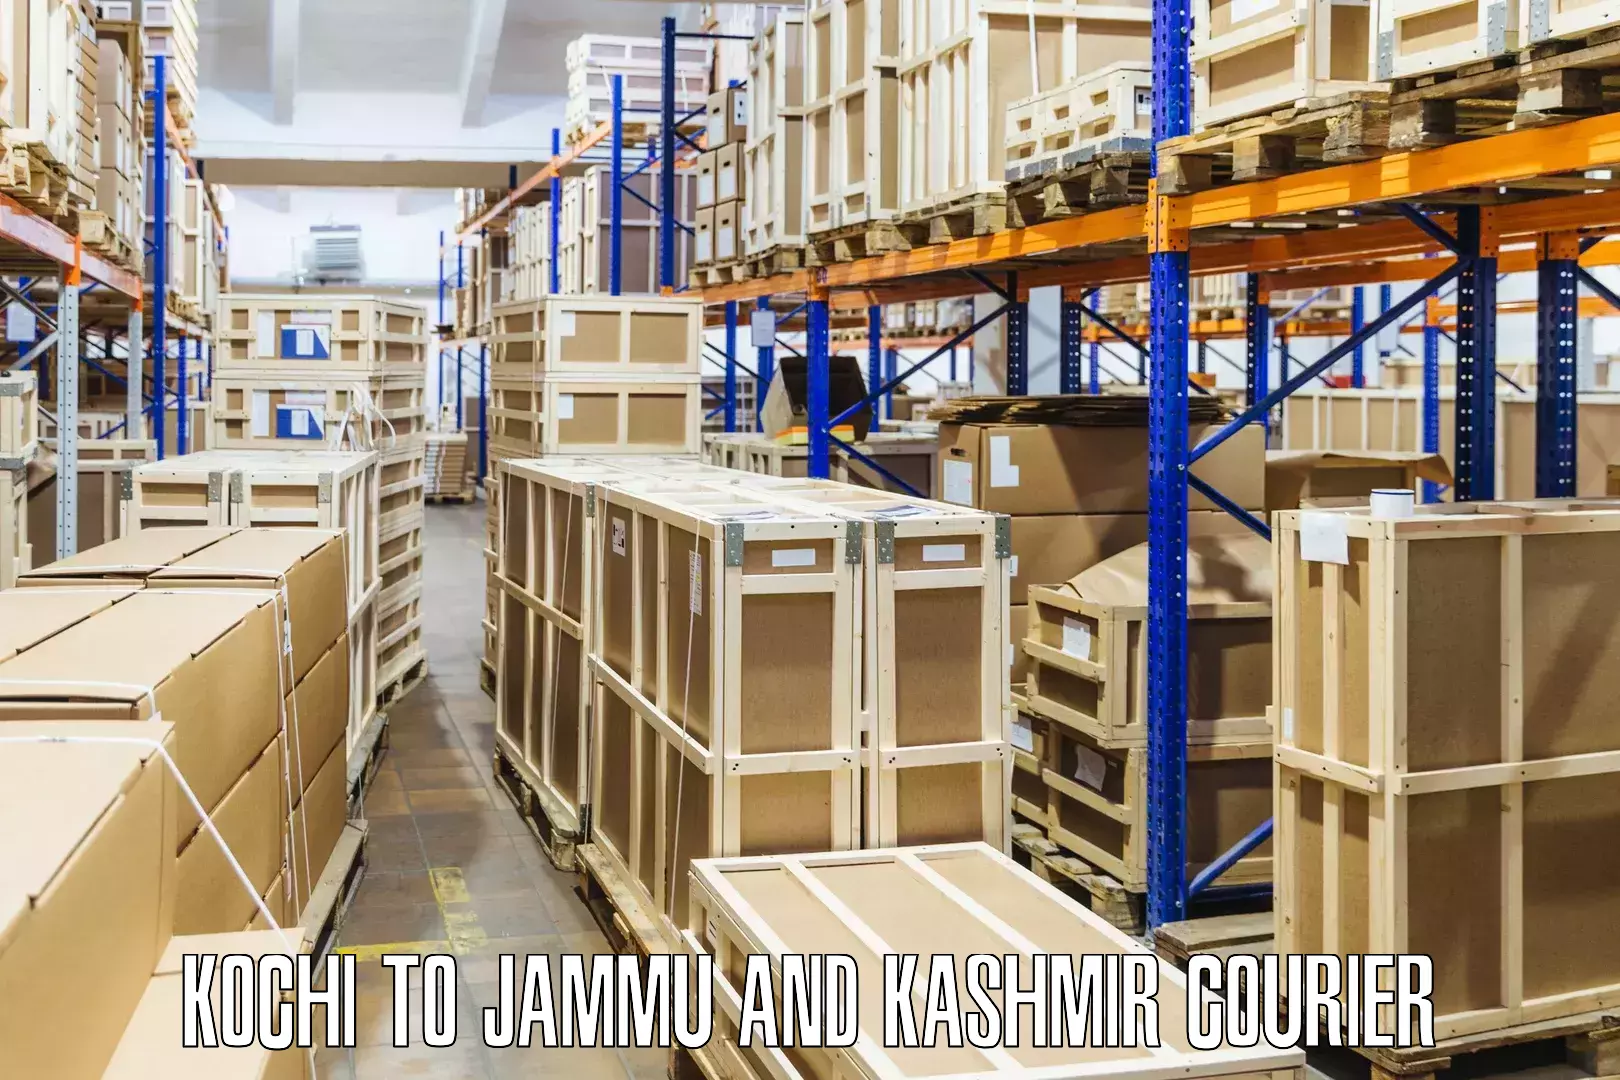 Courier rate comparison Kochi to Srinagar Kashmir